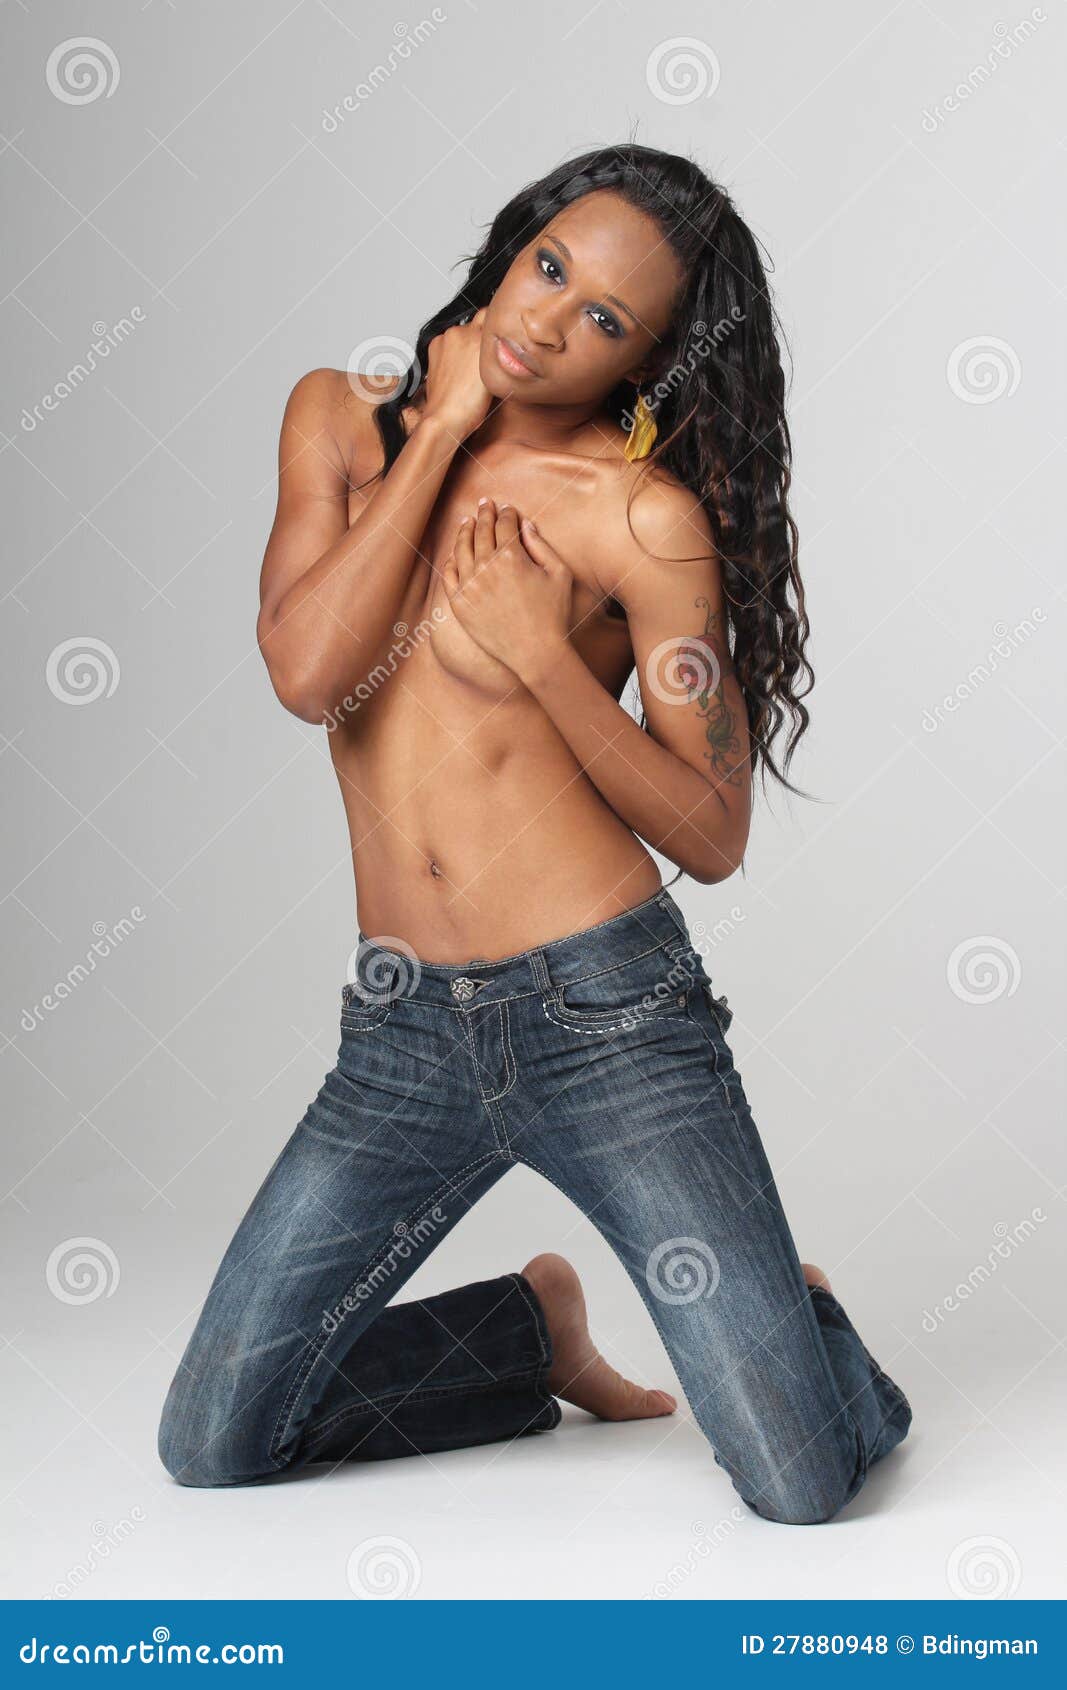 brandon pruet recommends topless women wearing jeans pic